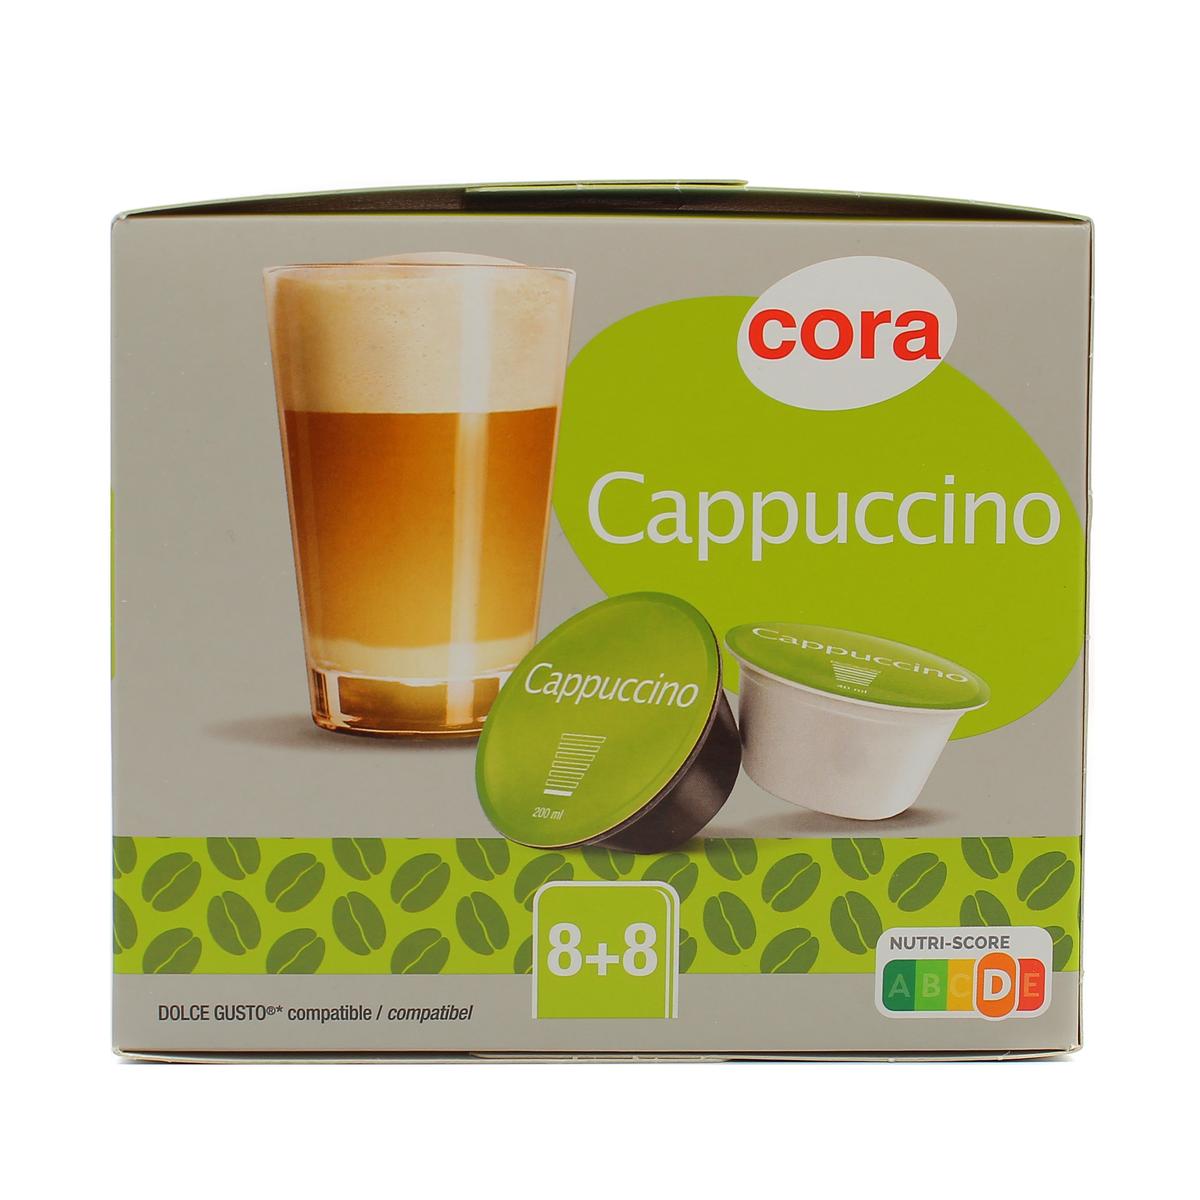 Achat / Vente Cora Capsules type dolce gusto capuccino, 16 capsules